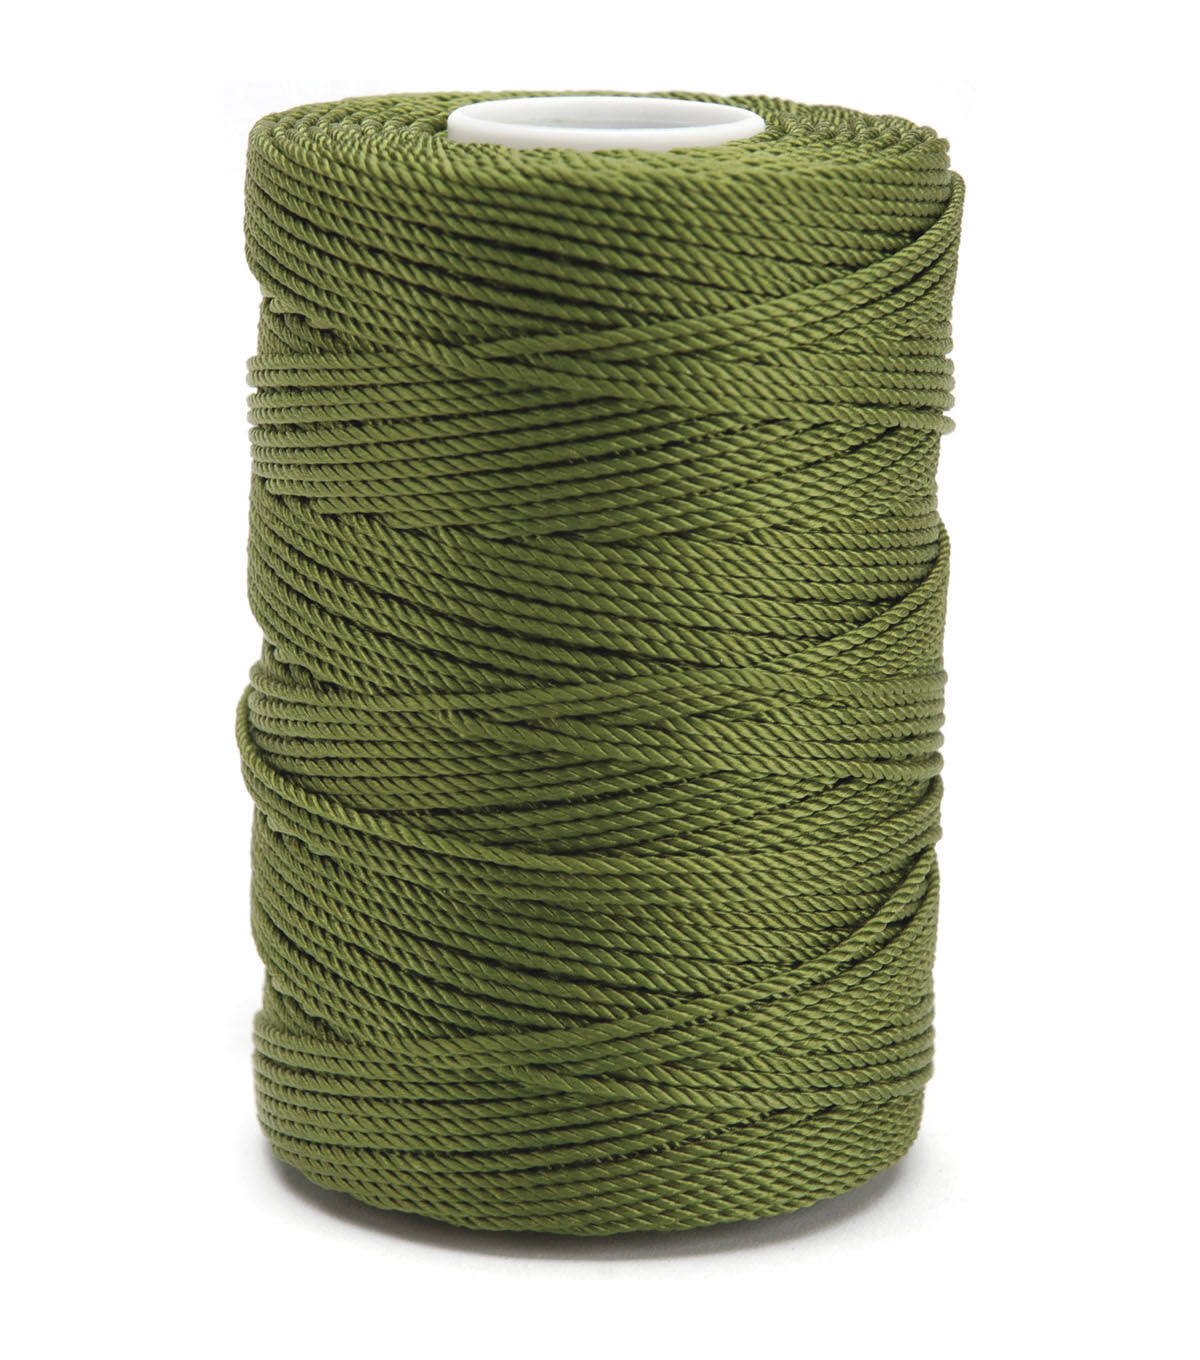 Iris Nylon Crochet Thread - Arugula